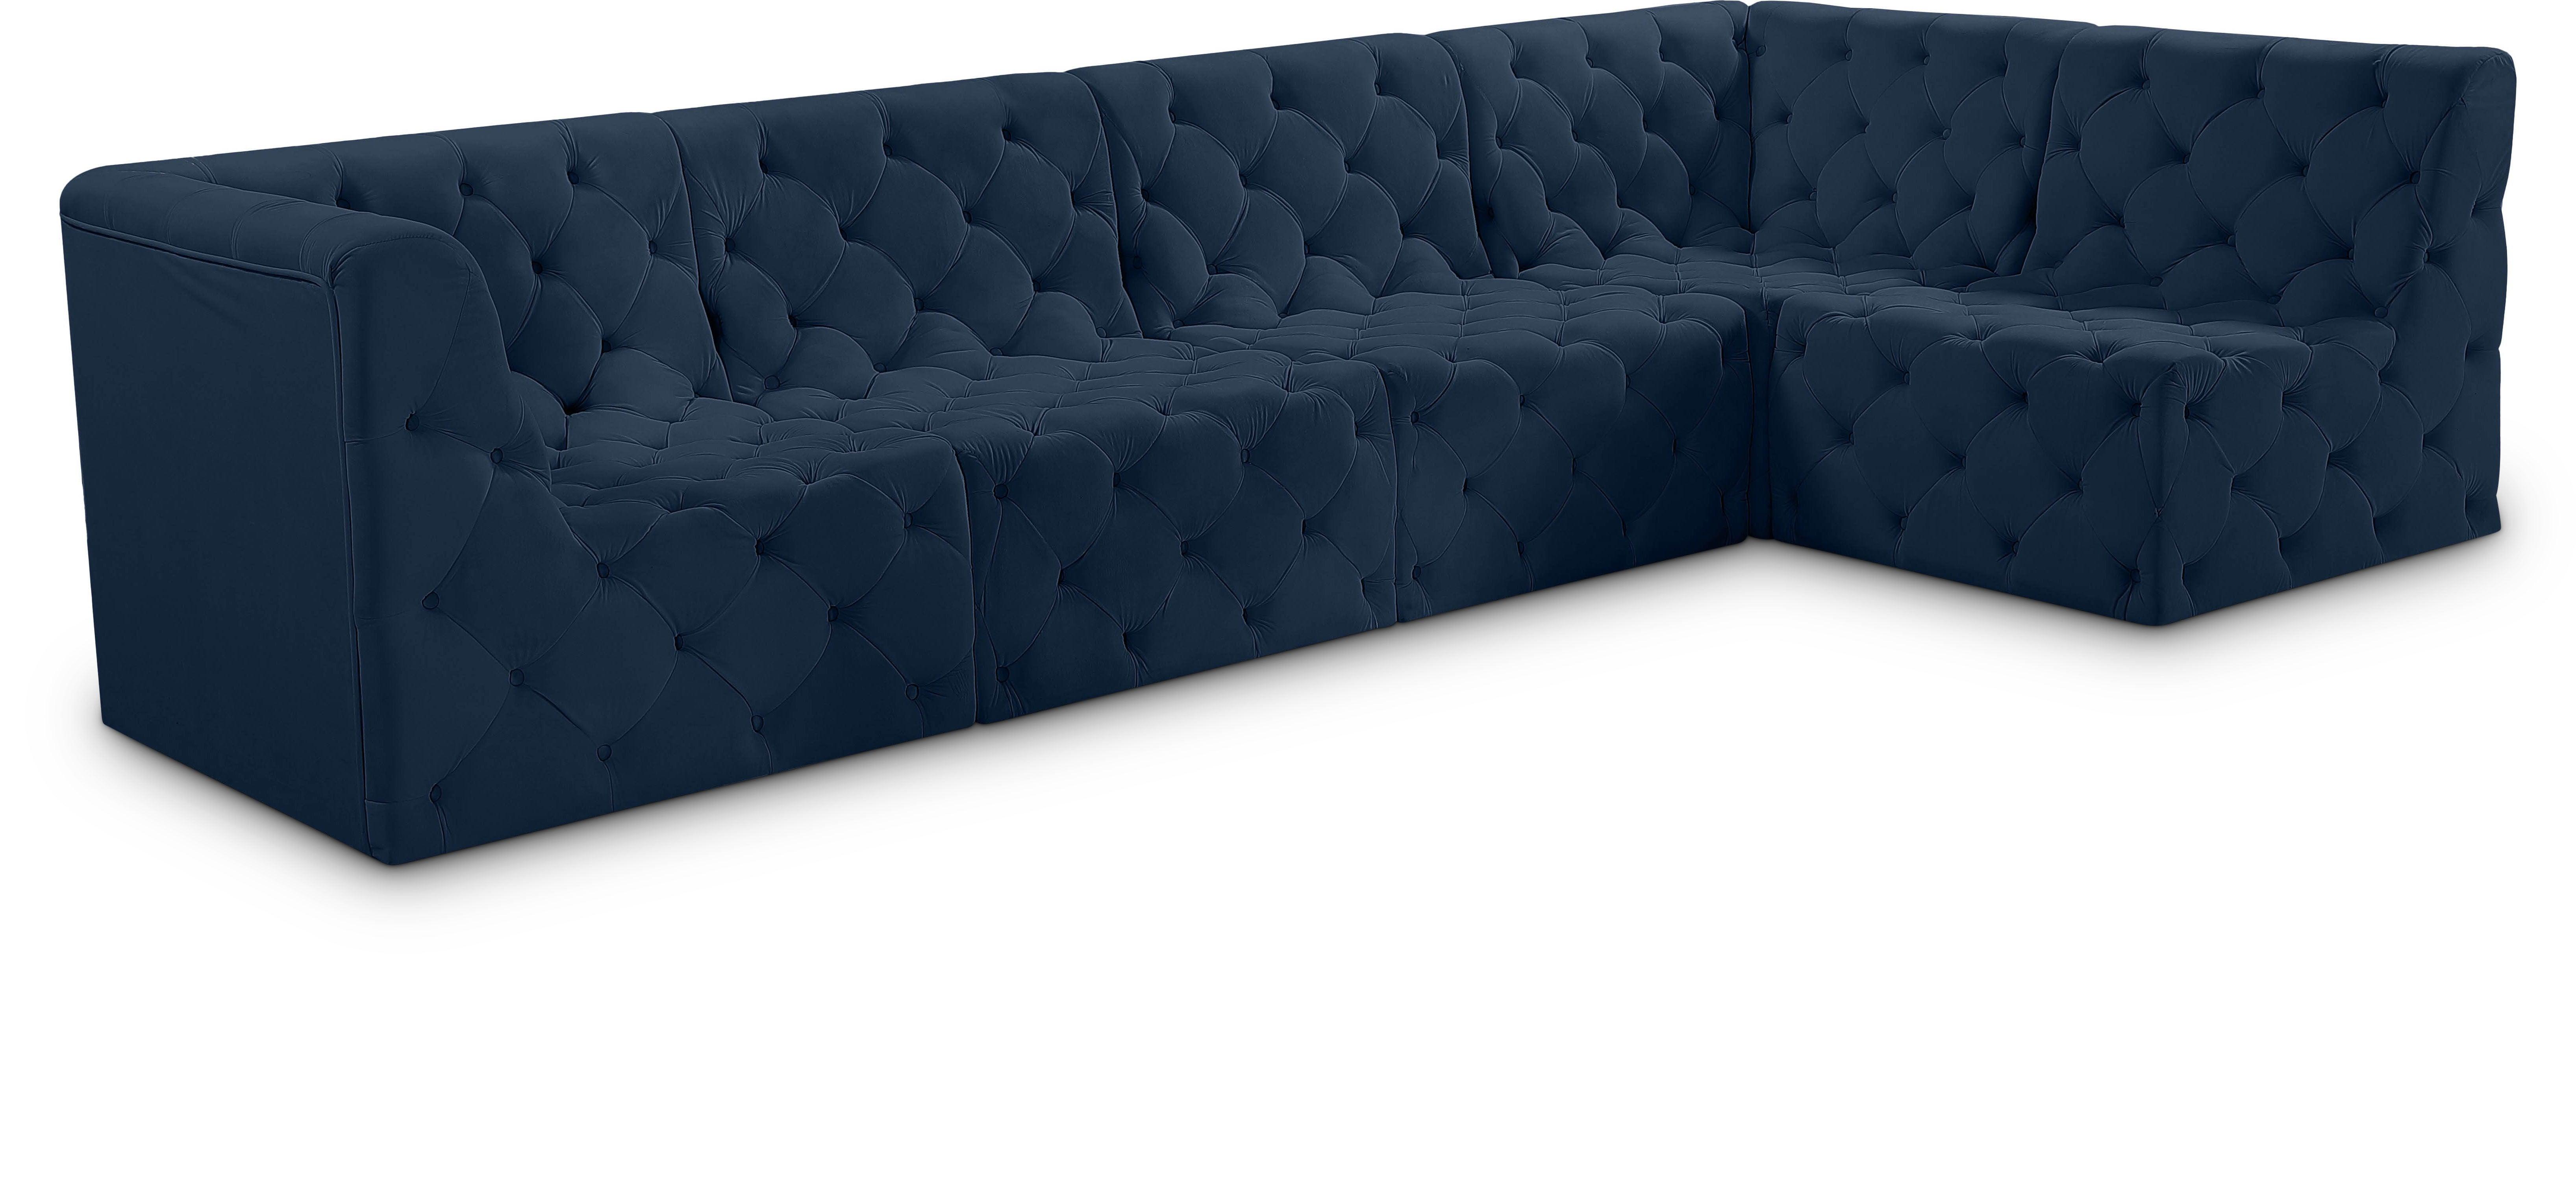 Meridian Furniture - Tuft - Modular Sectional 5 Piece - Navy - Fabric - 5th Avenue Furniture